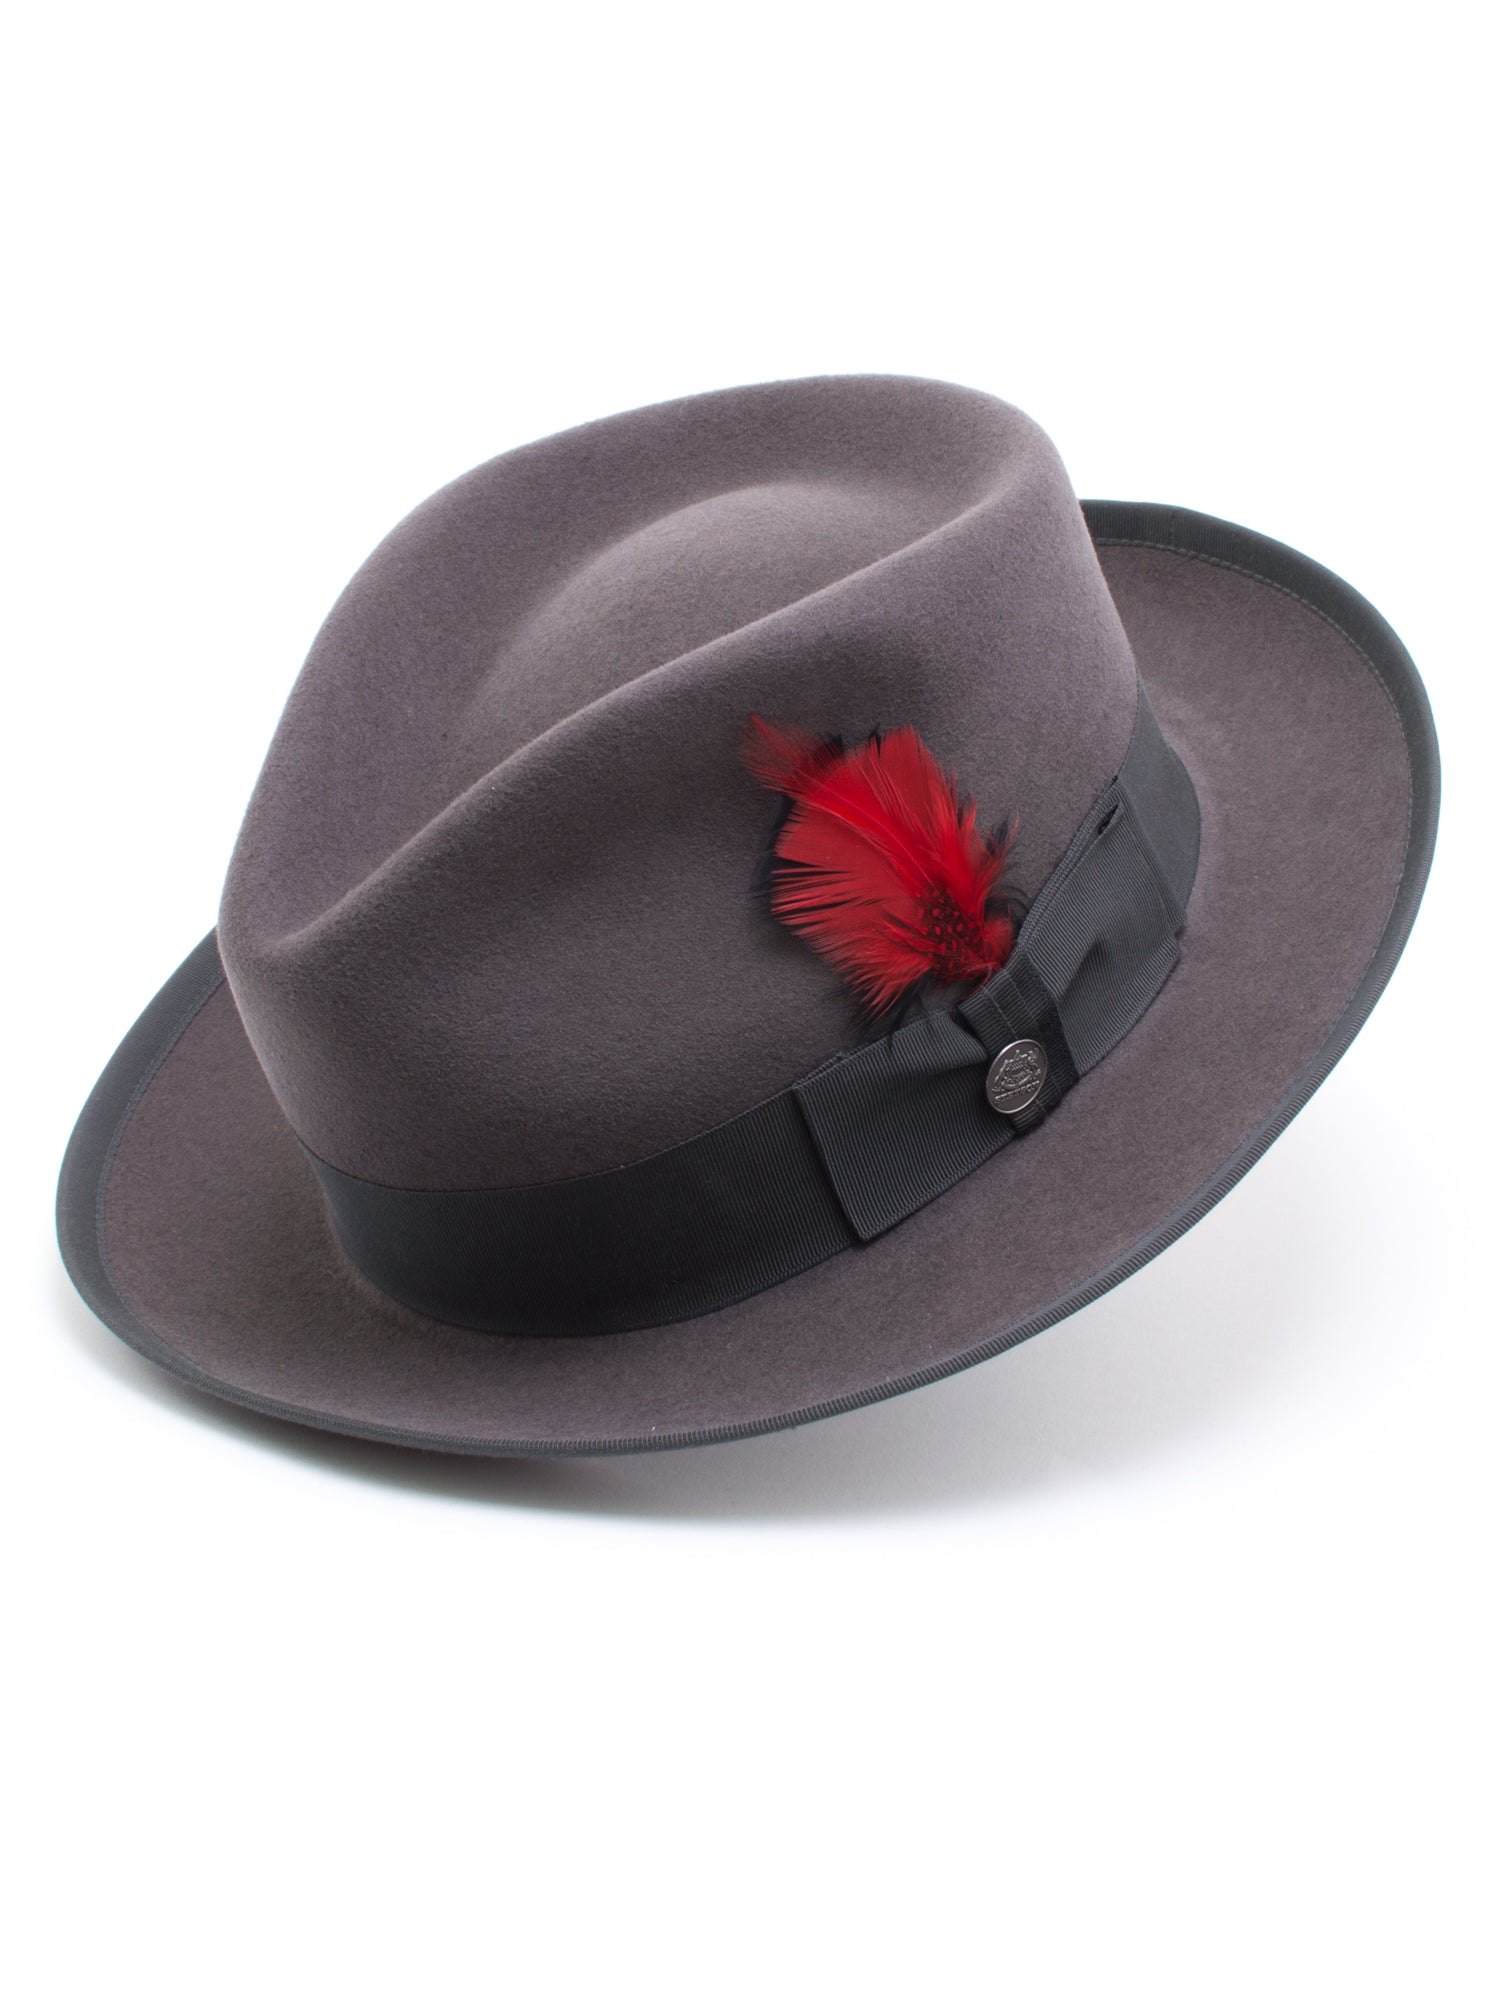 Stetson 100% Wool Felt 'Whippet' Hats in CARIBOU